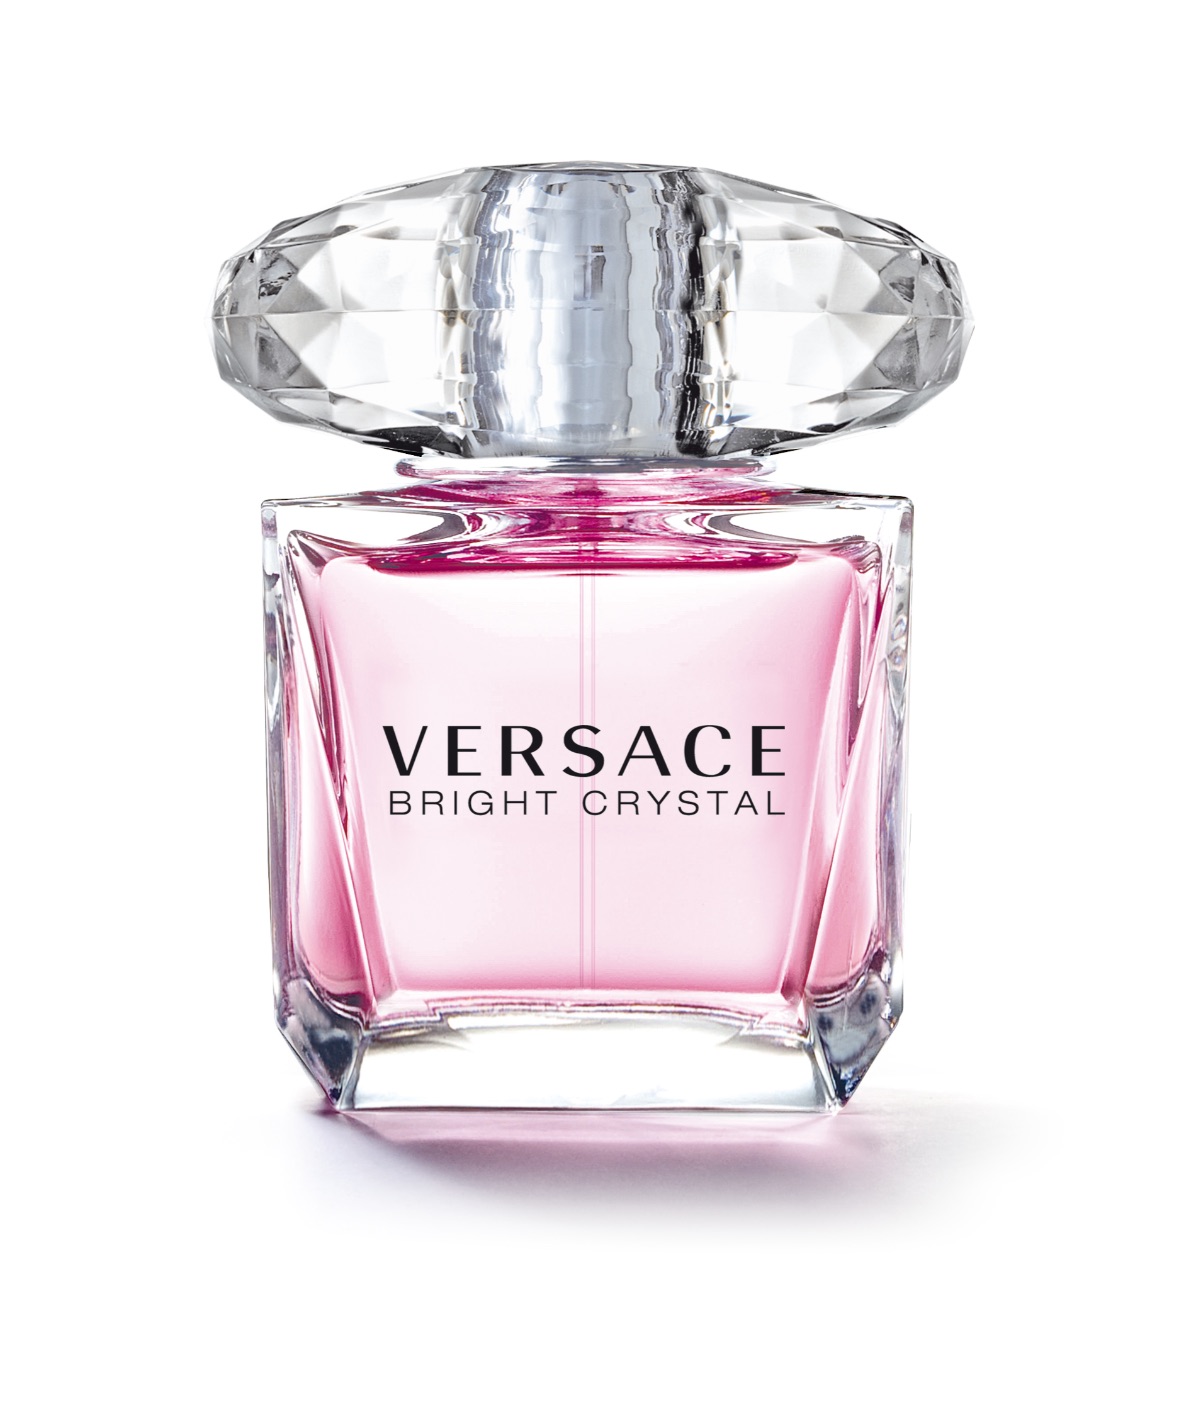 Versace Bright Crystal Eau De Toilette 50ml - thefragrancecounter.co.uk